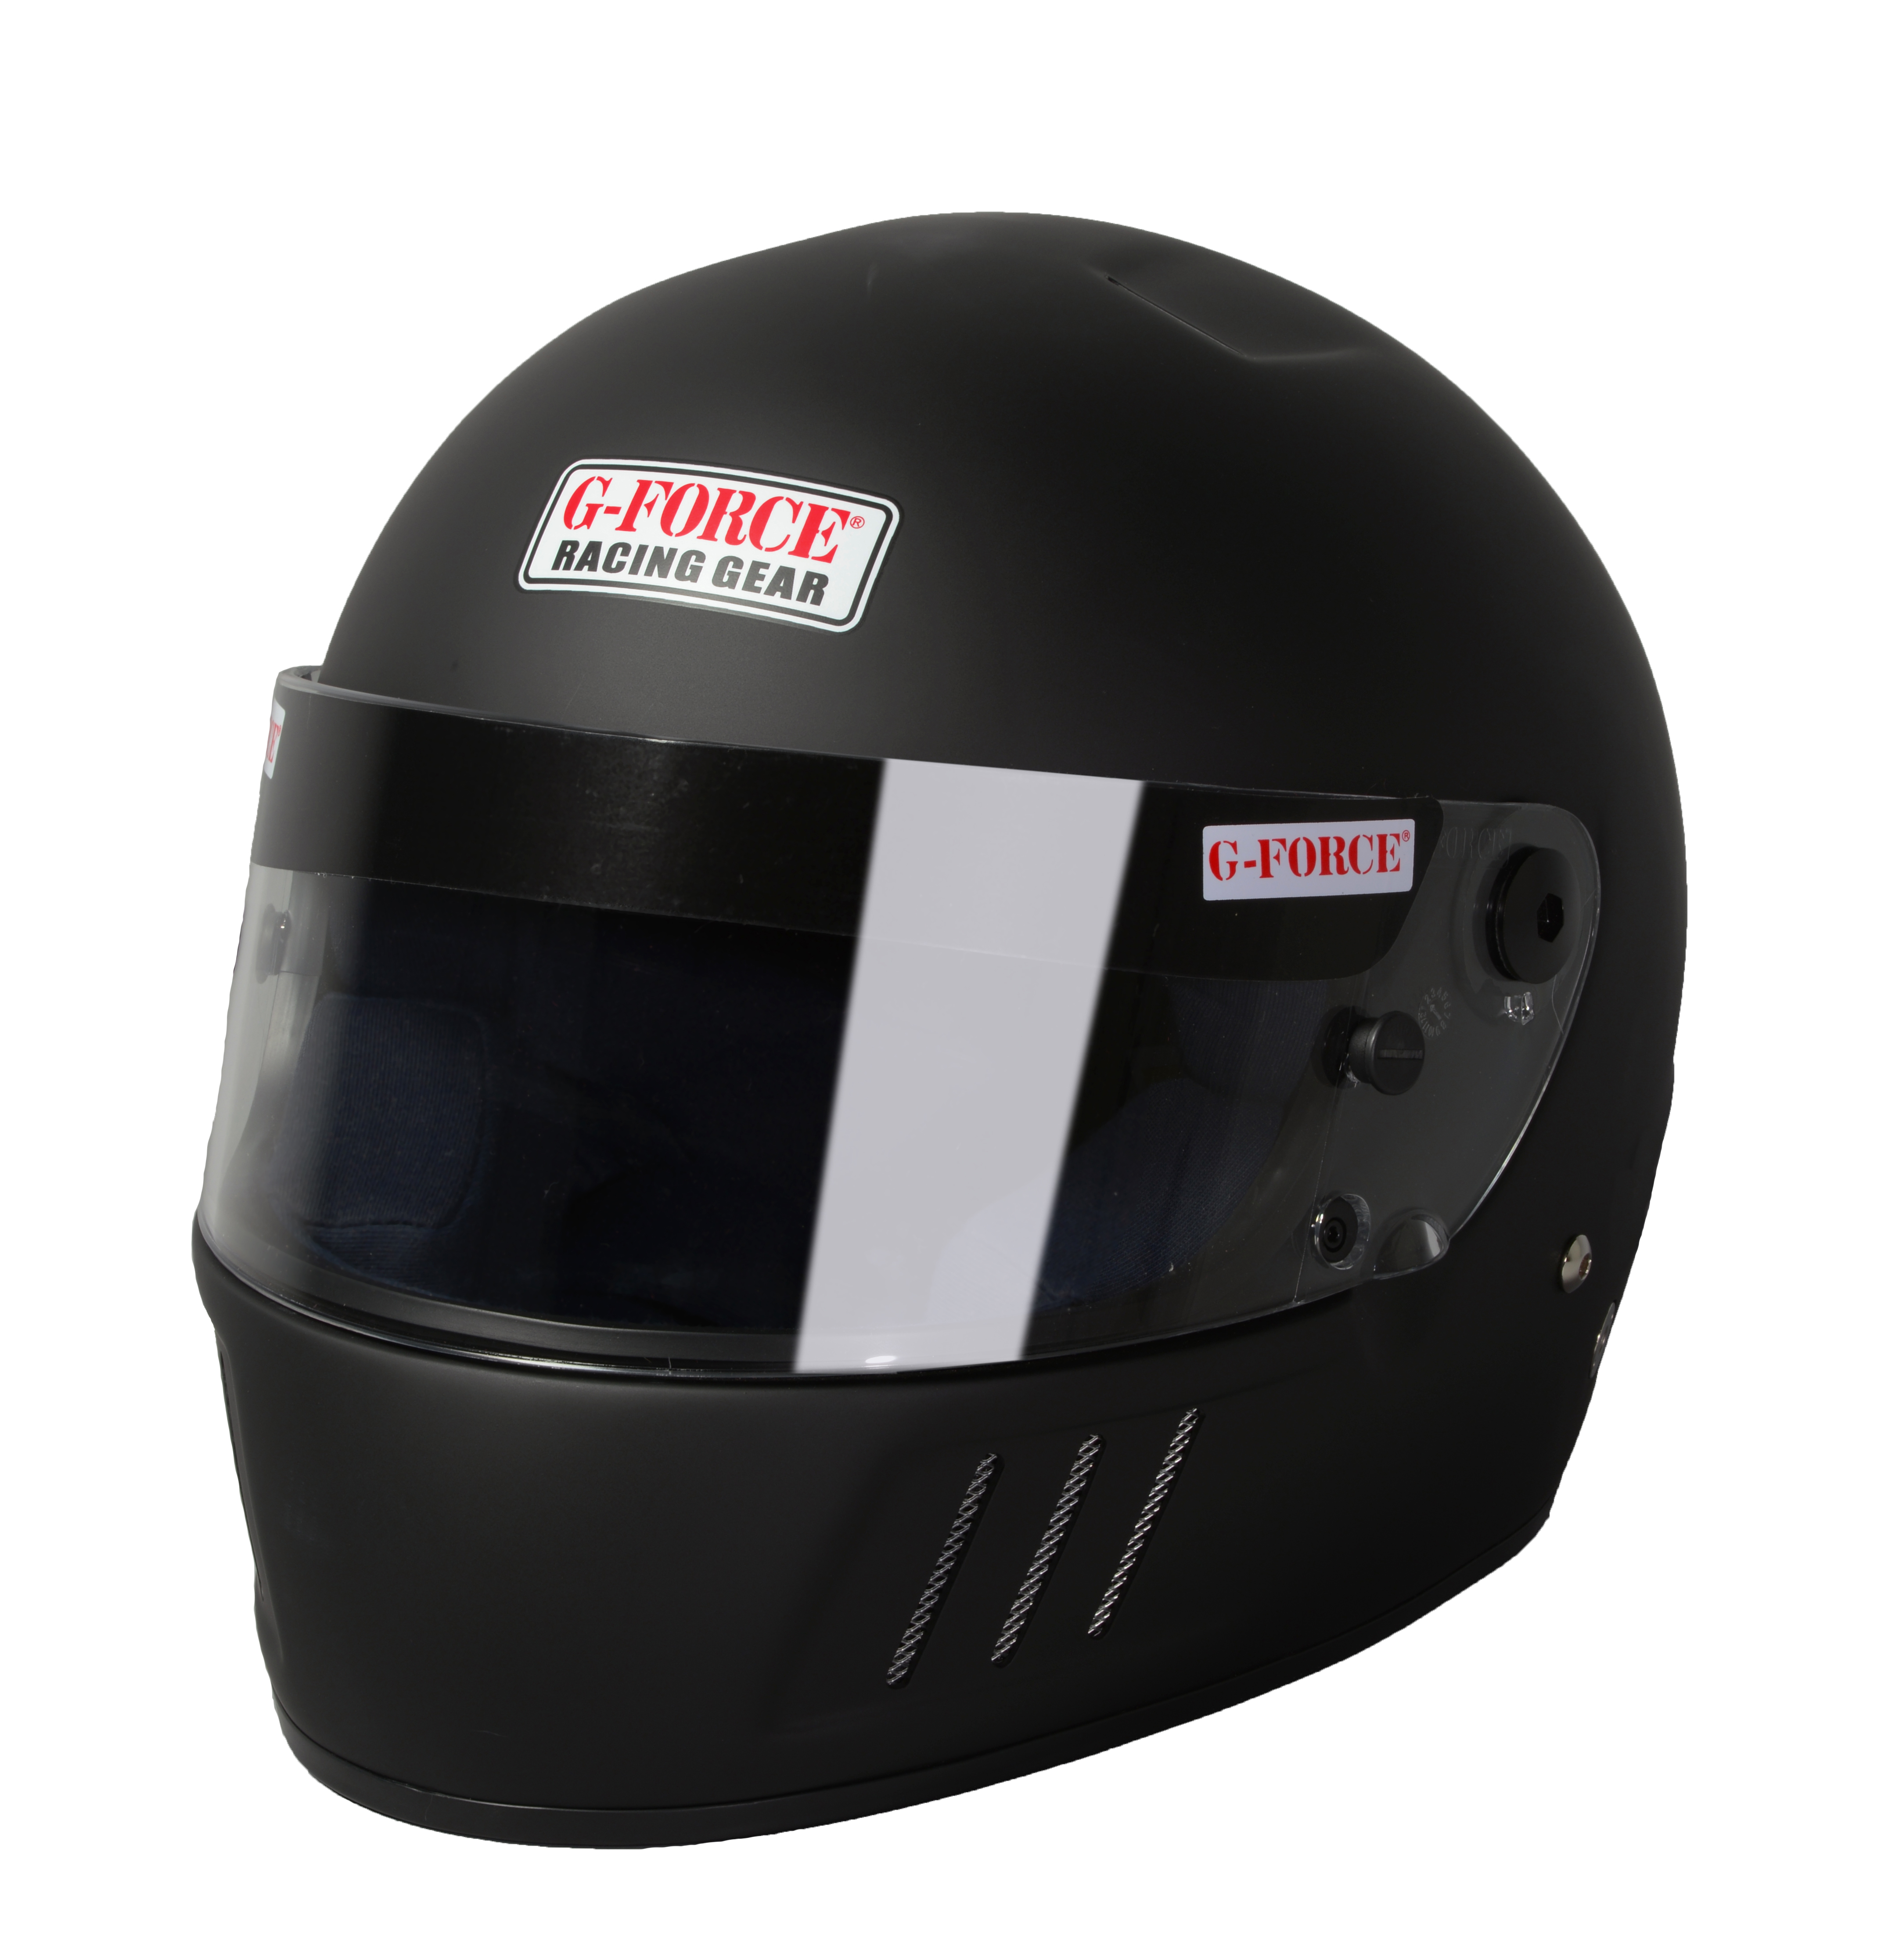 G-Force Racing Gear Helmet, PRO ELIMINATOR SA2010 FULL FACE SMALL MATTE